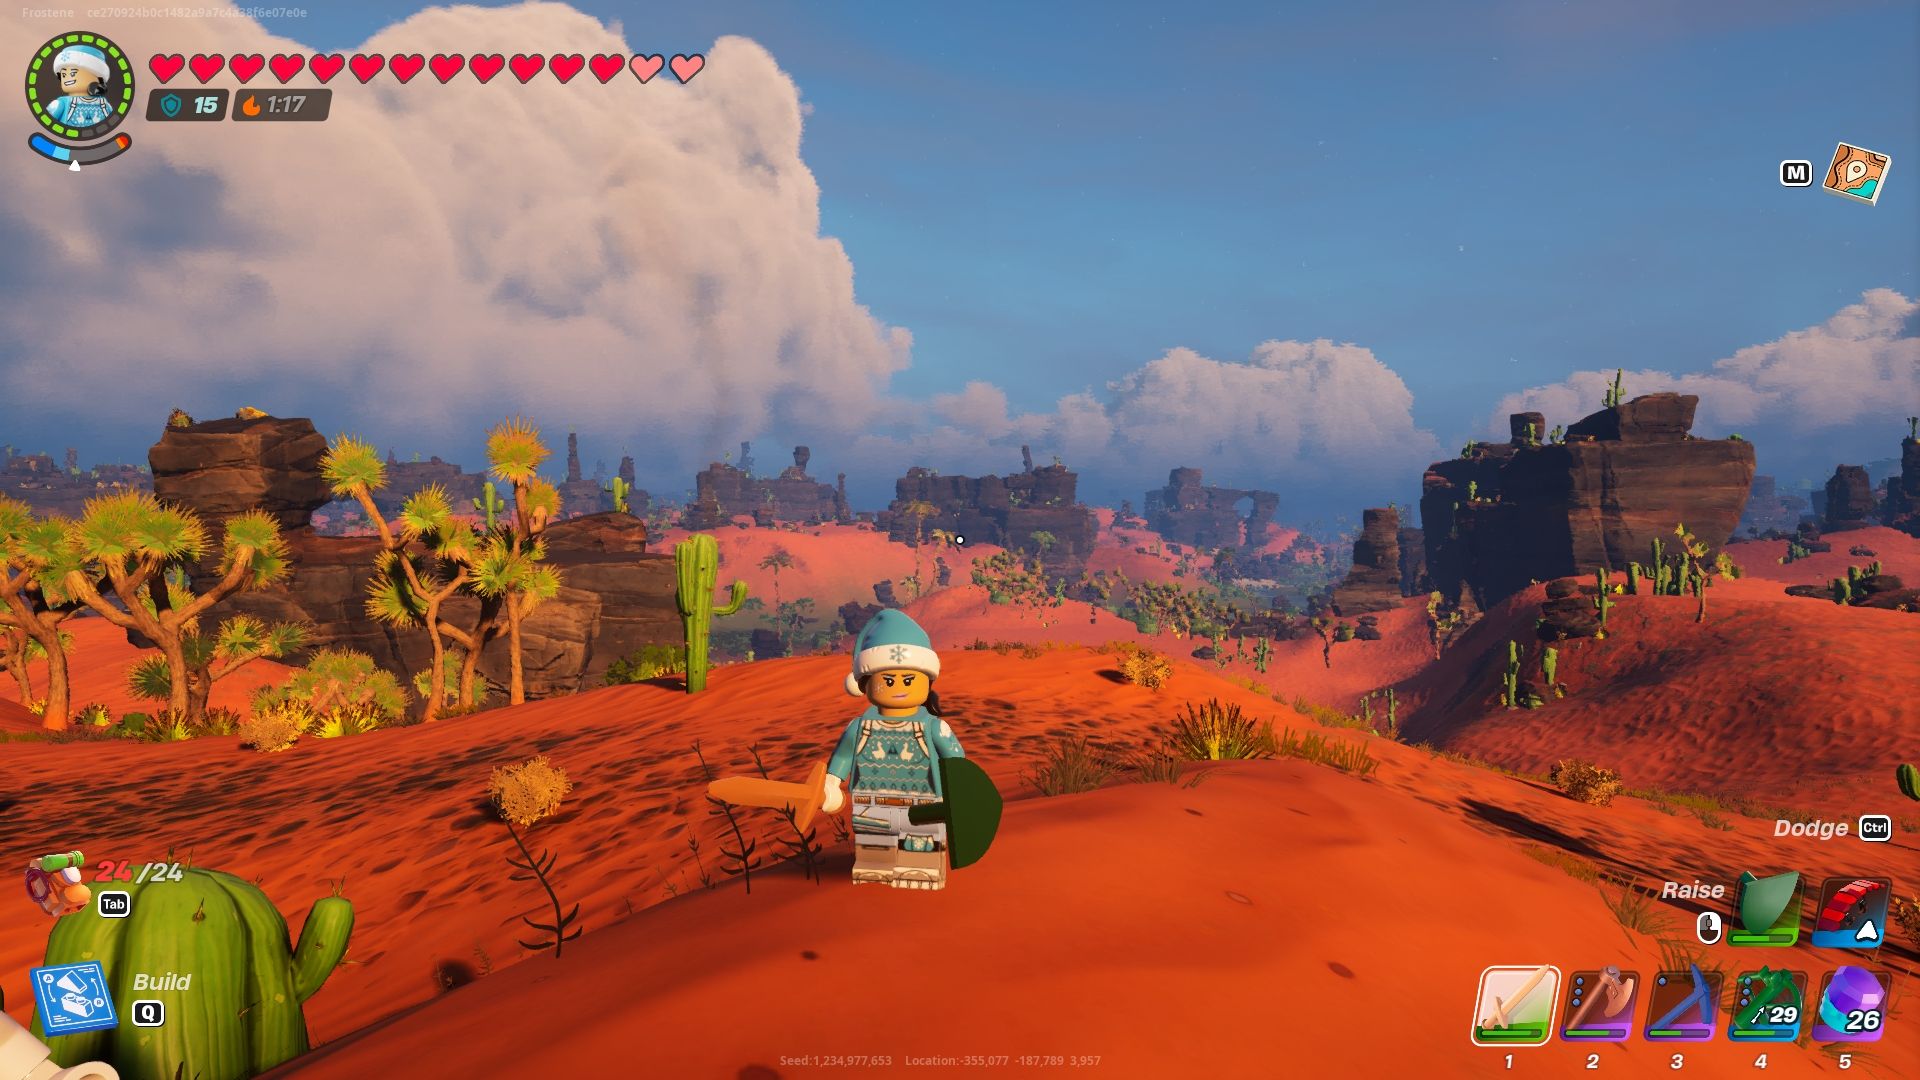 Аватар Lego Fortnite, стоящий на песчаном холме в биоме Сухой долины, где можно найти обсидиан.